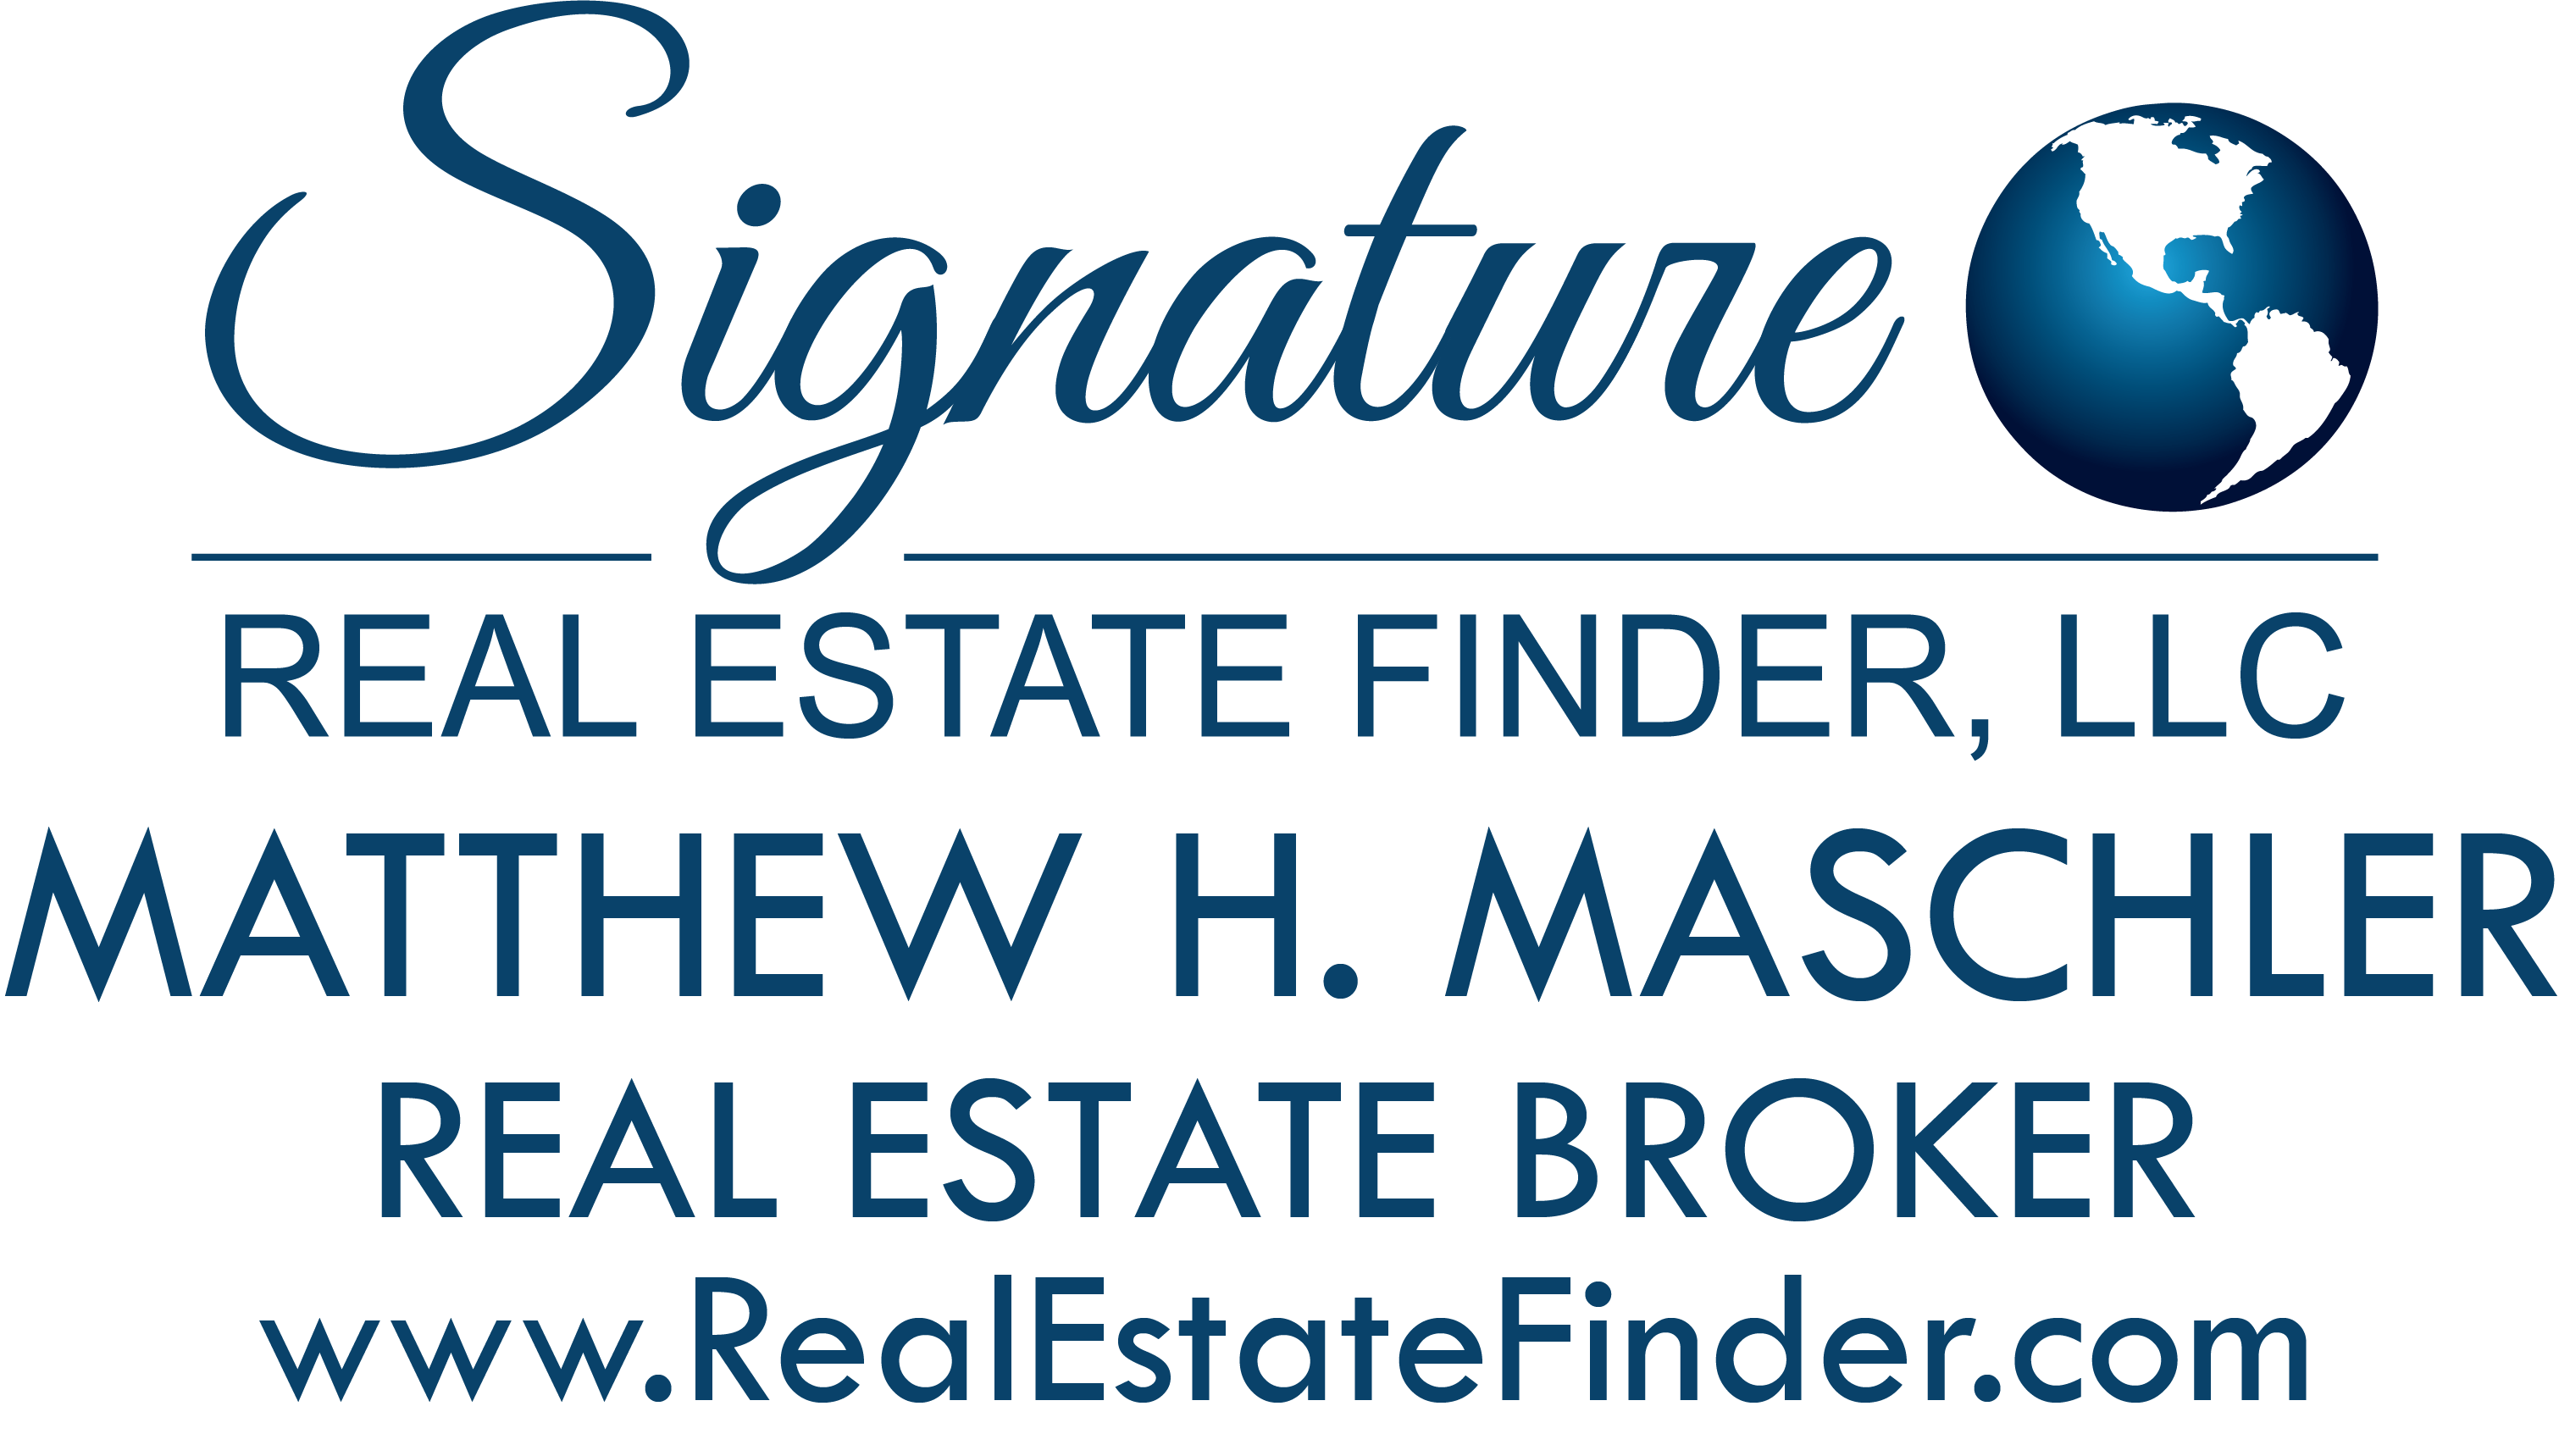 Signature Real Estate Finder, LLC.